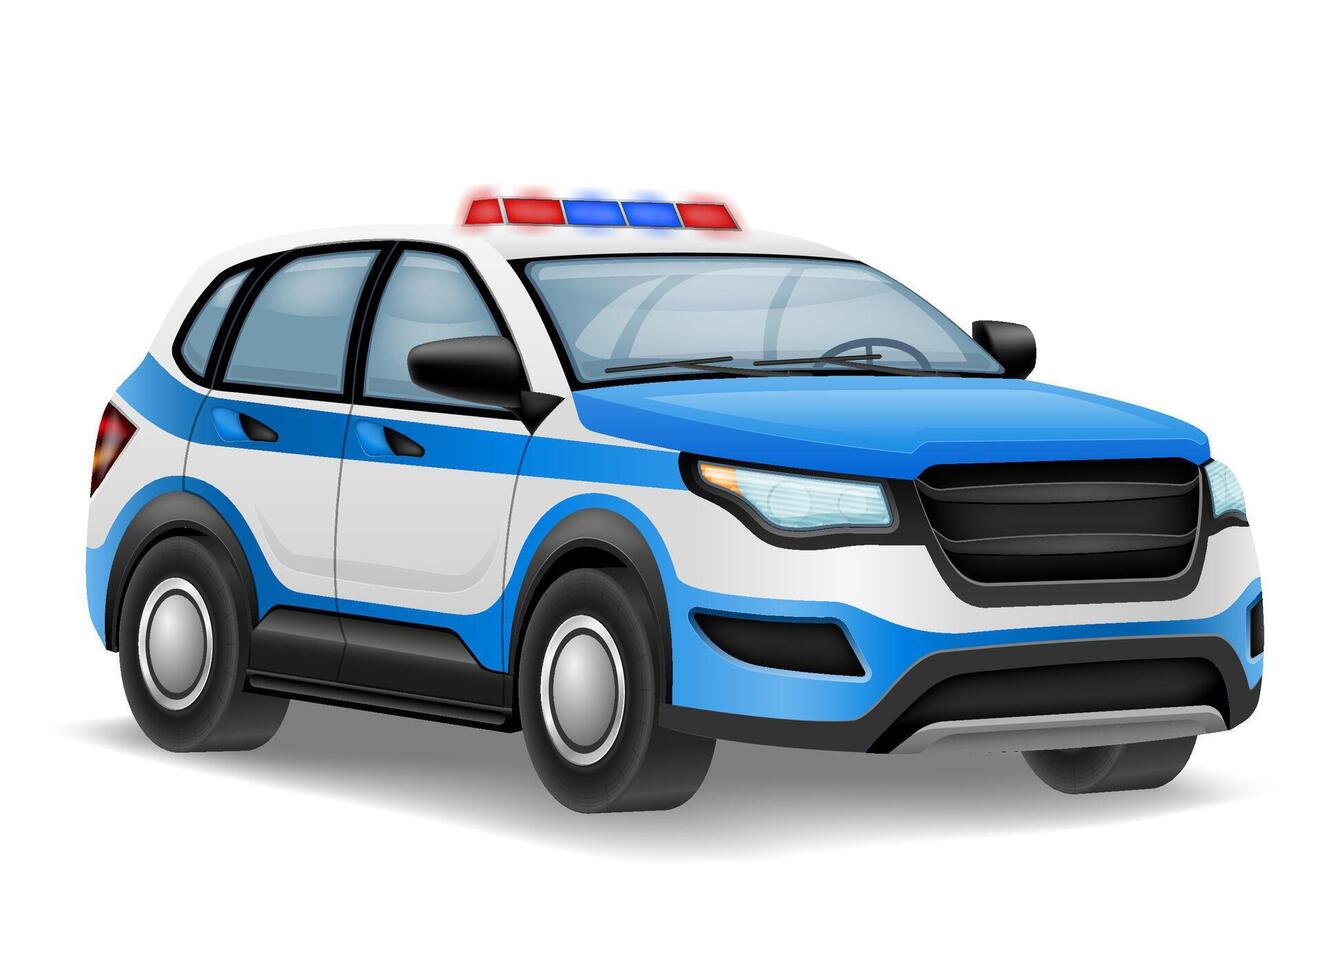 polis bil bil fordon illustration isolerat på vit bakgrund vektor